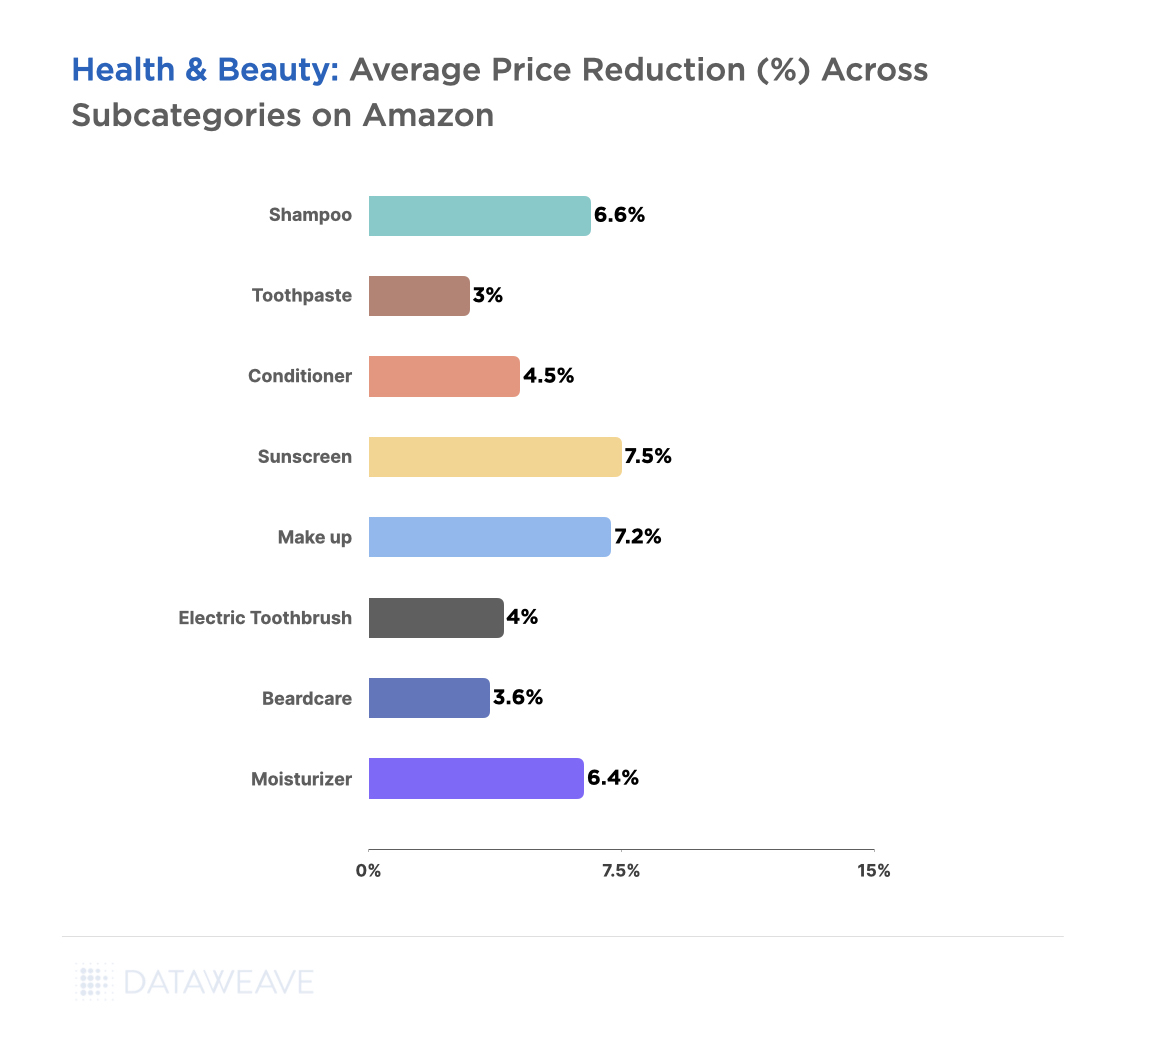 Health & beauty average price reduction across subcategories on Amazon.